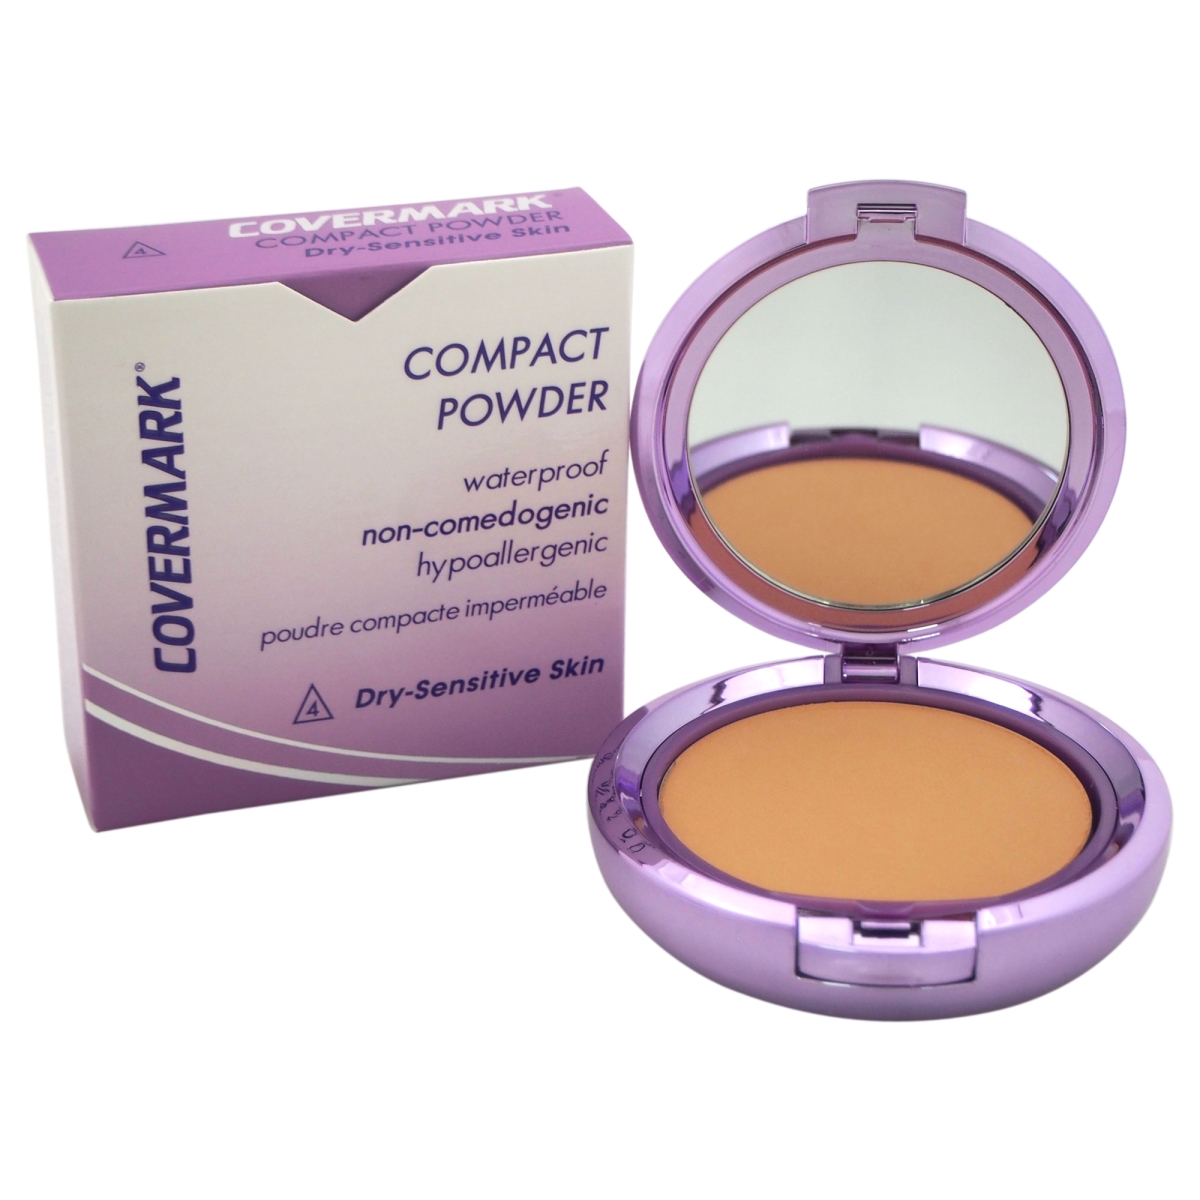 W-c-8313 0.35 Oz No. 4 Waterproof Compact Powder - Dry Sensitive Skin For Women